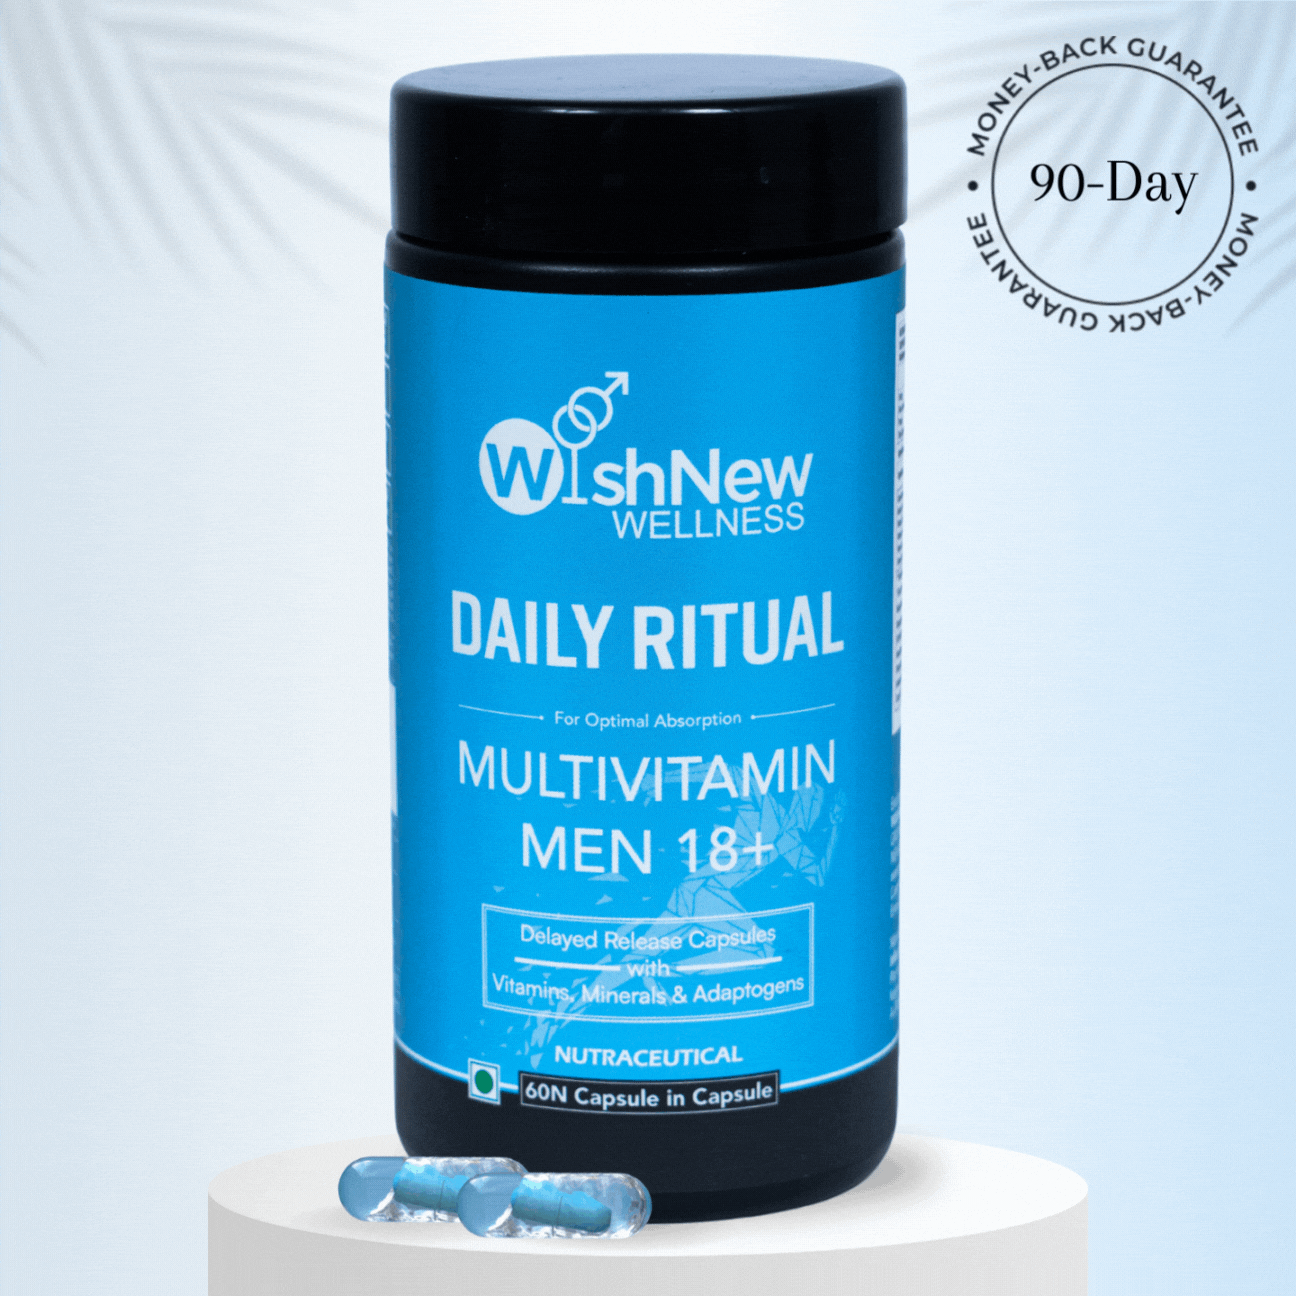 Daily Ritual Multivitamin MEN 18+